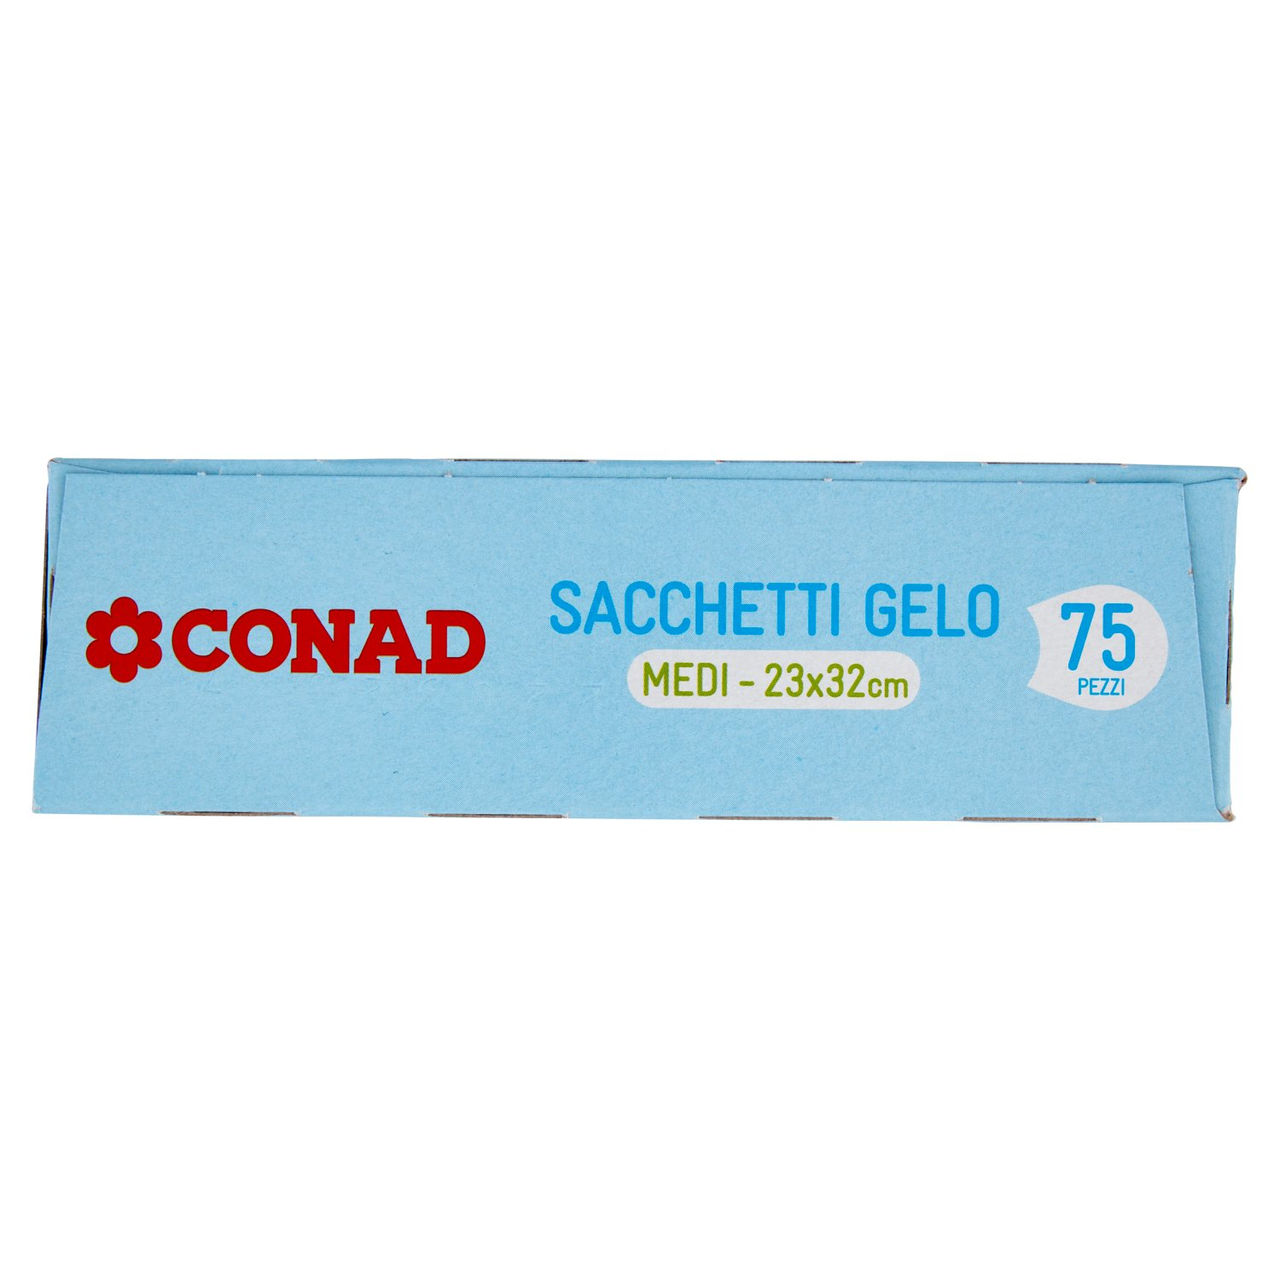 Sacchetti Gelo Medi 23x32cm 75 pezzi Conad online